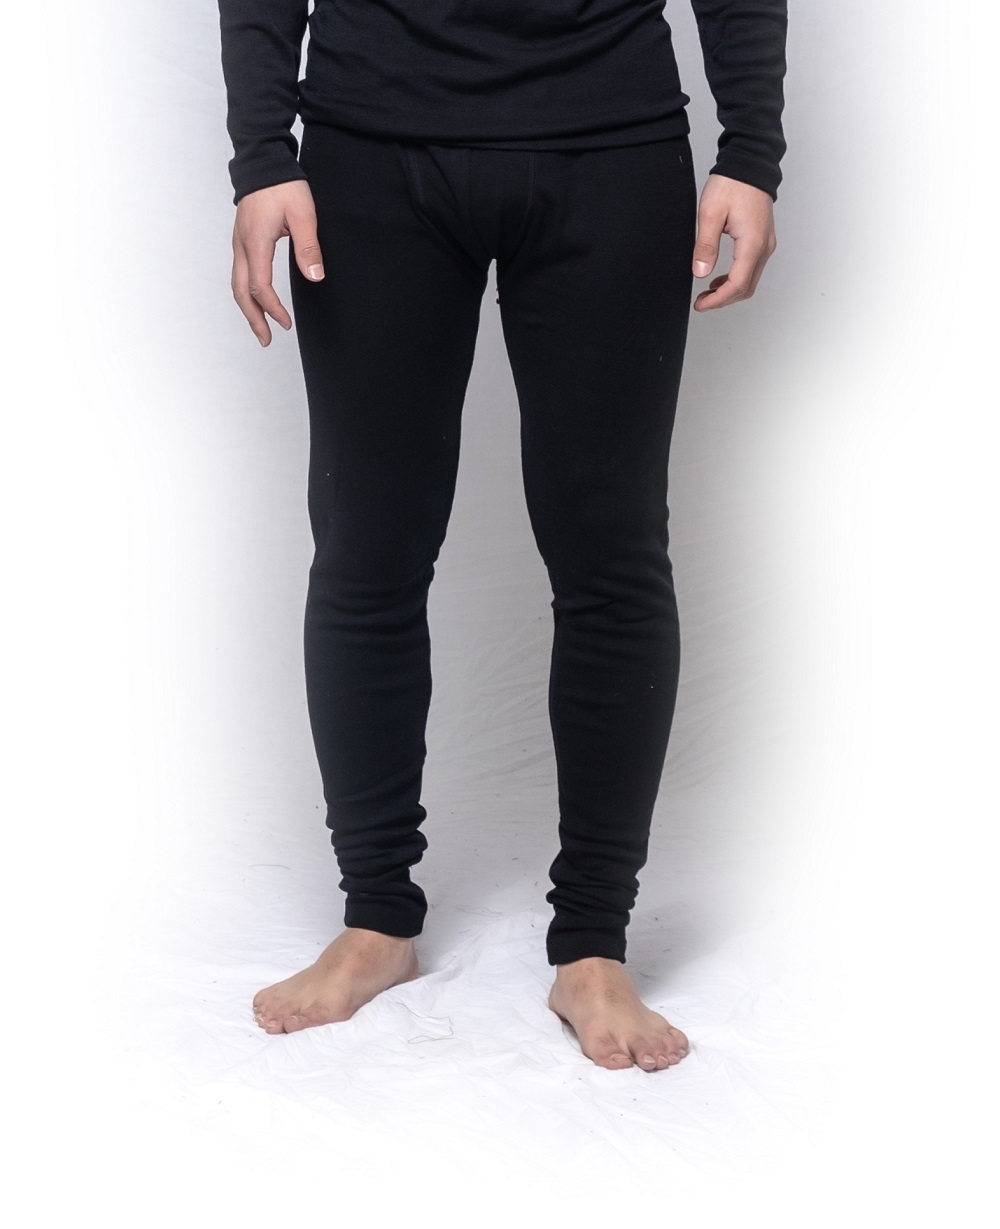 Mens Brandella Thermals Spencers Pure Wool 200gsm Long Johns Pants Black